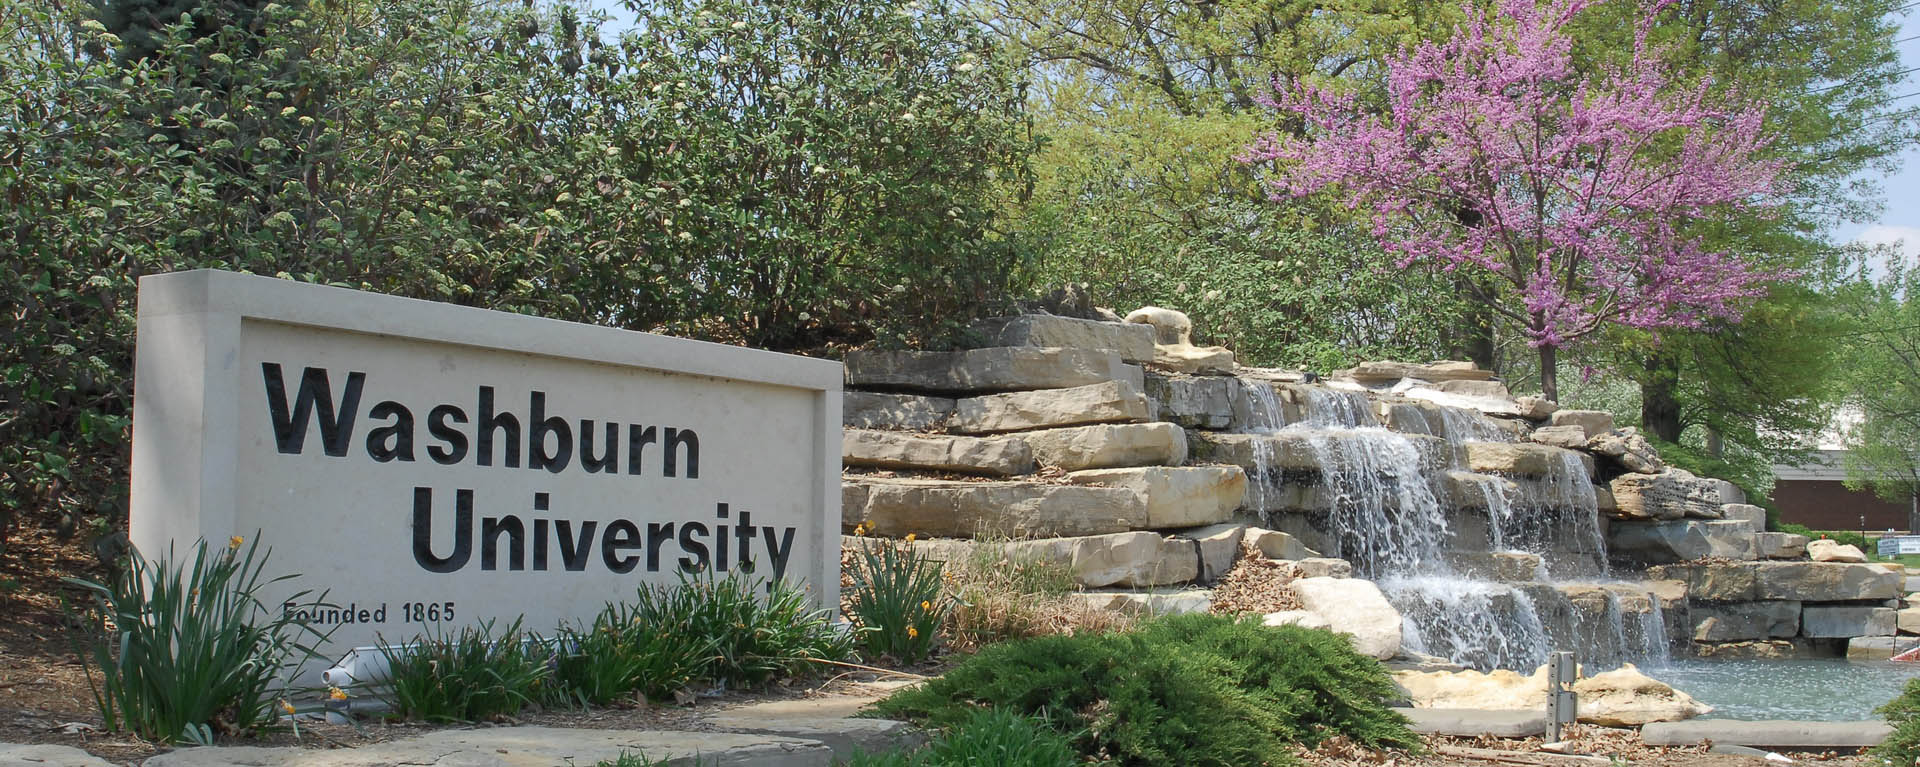 Washburn University sign and waterfall